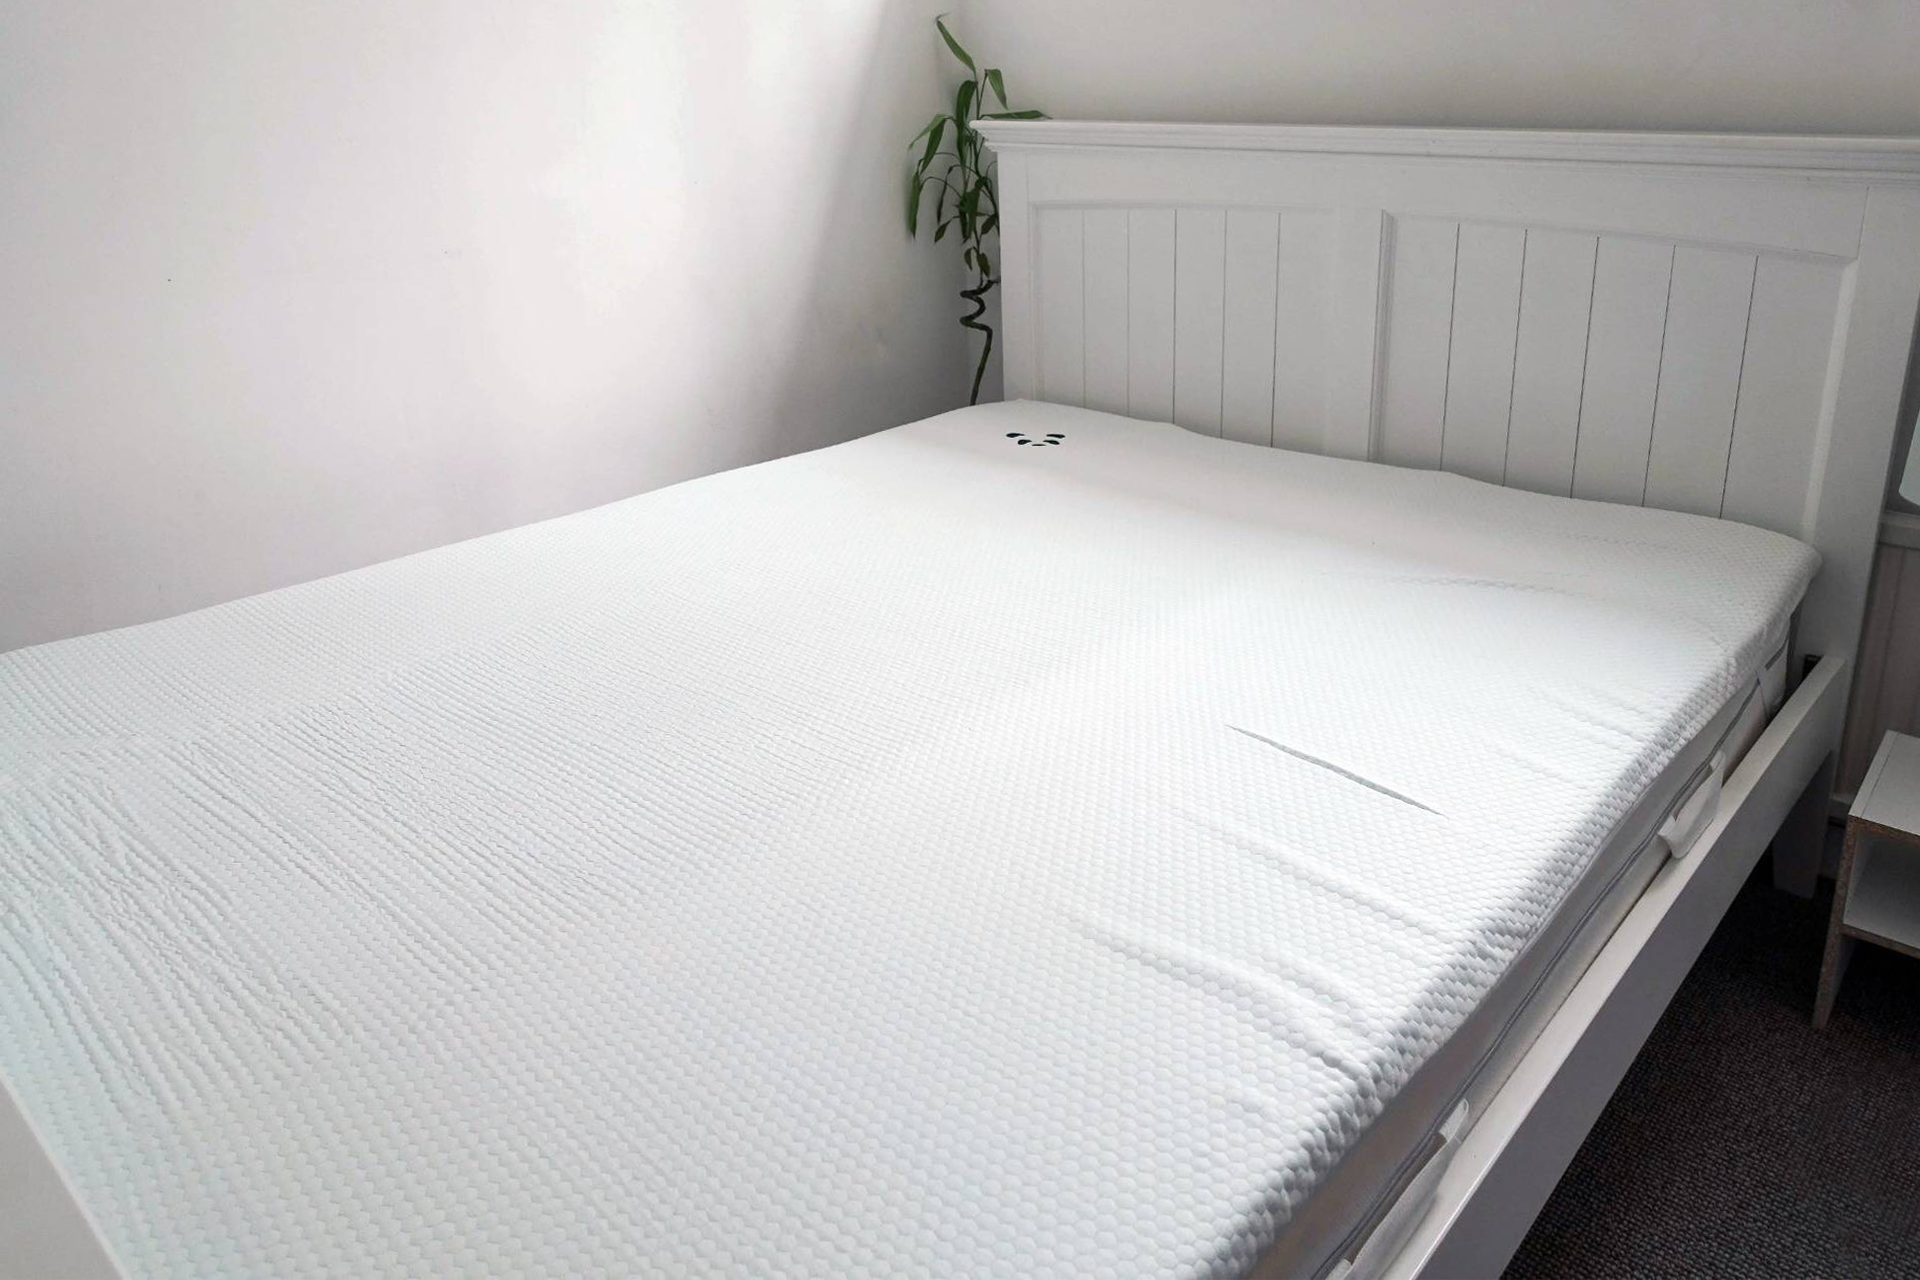 evencor gel plus mattress topper review